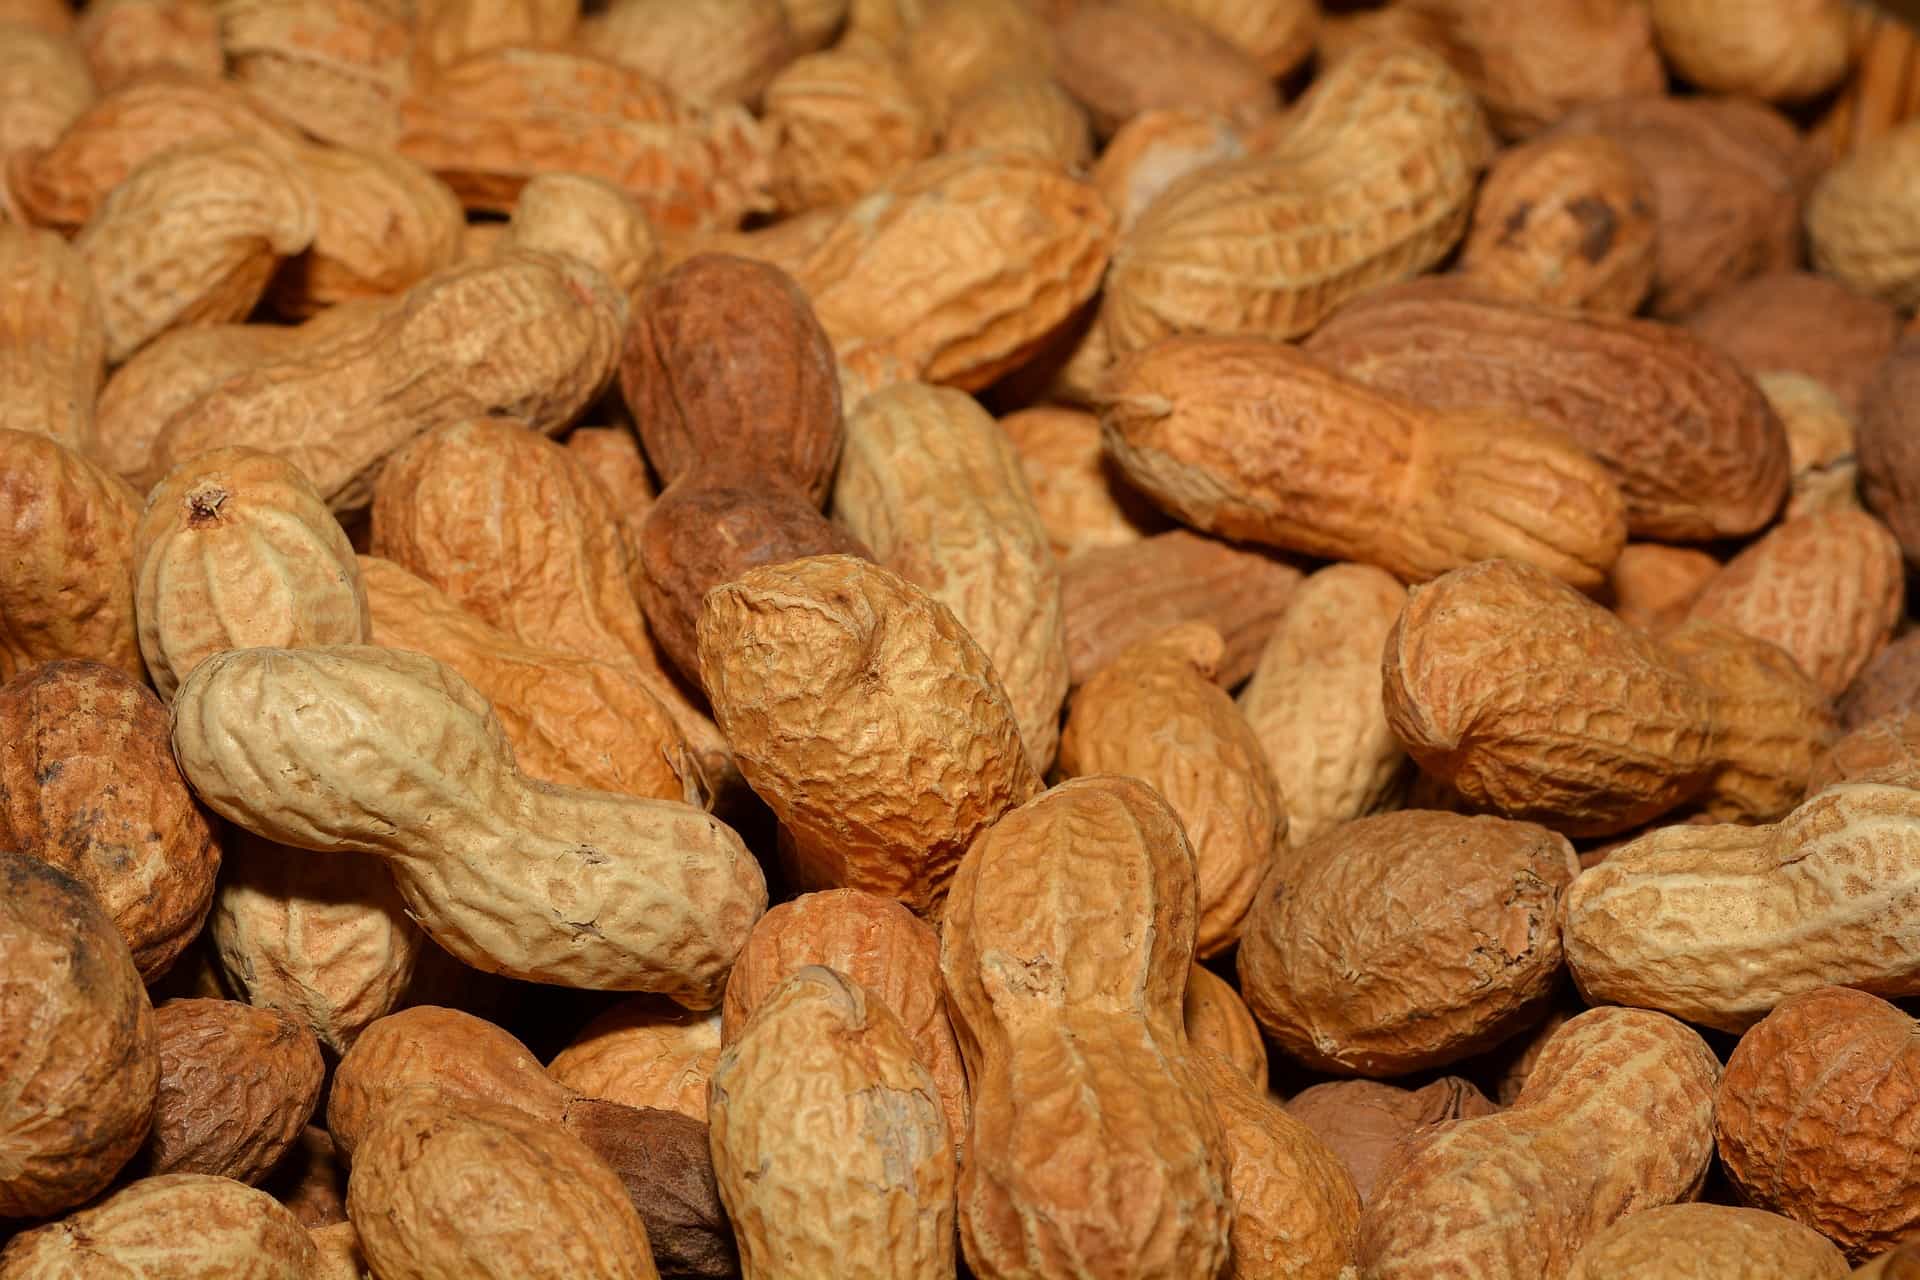 Peanut allergy levels higher in US children